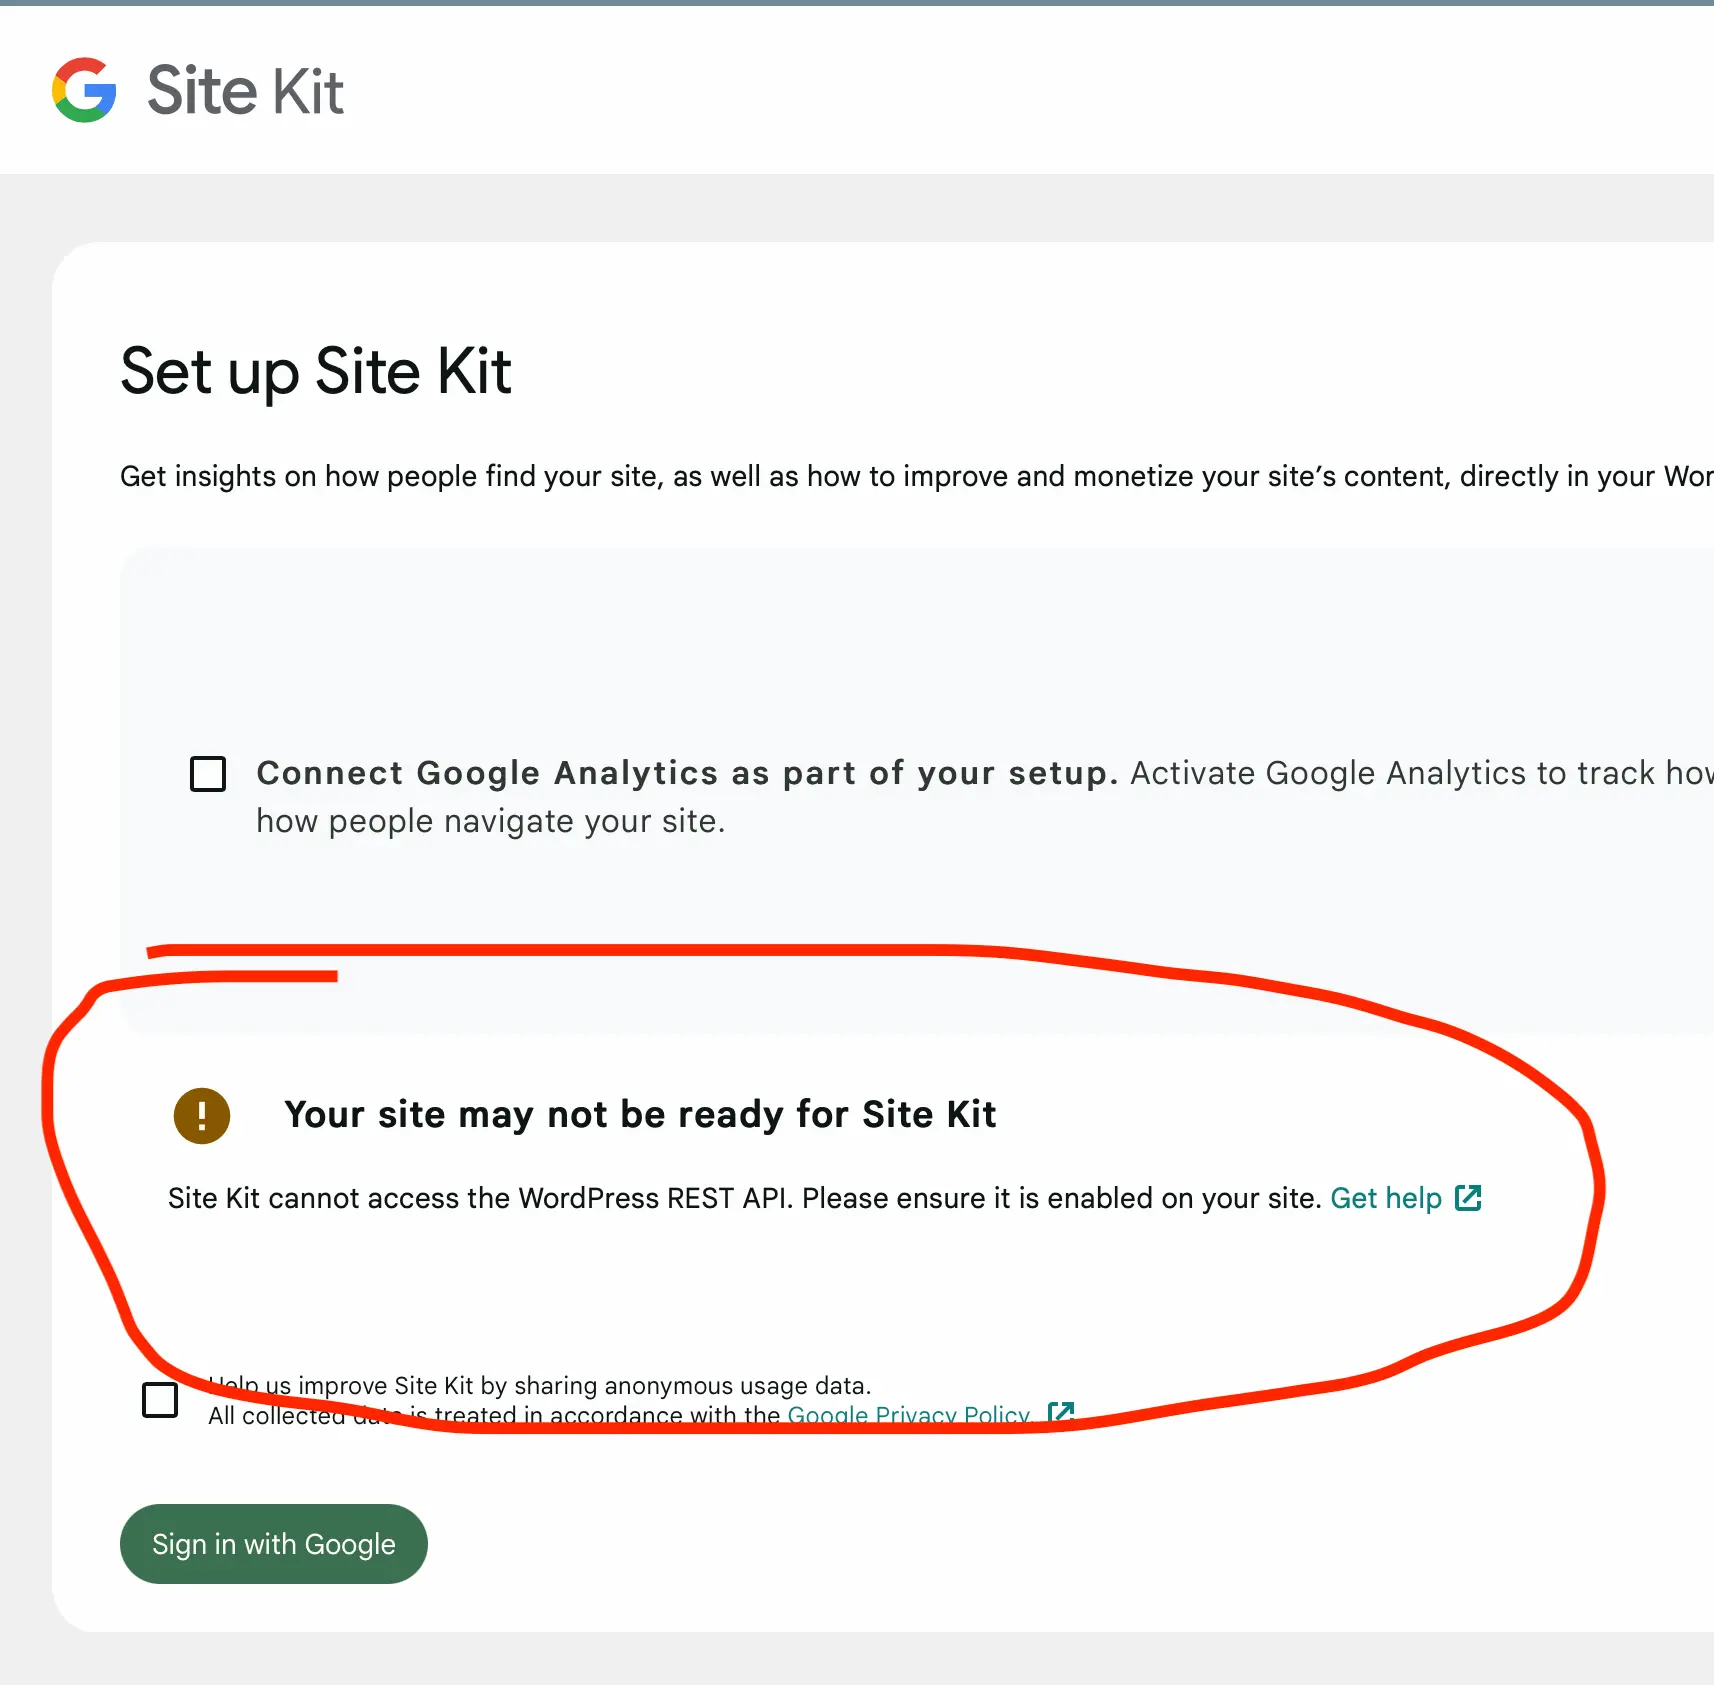 Google site kit can not access wordpress rest api